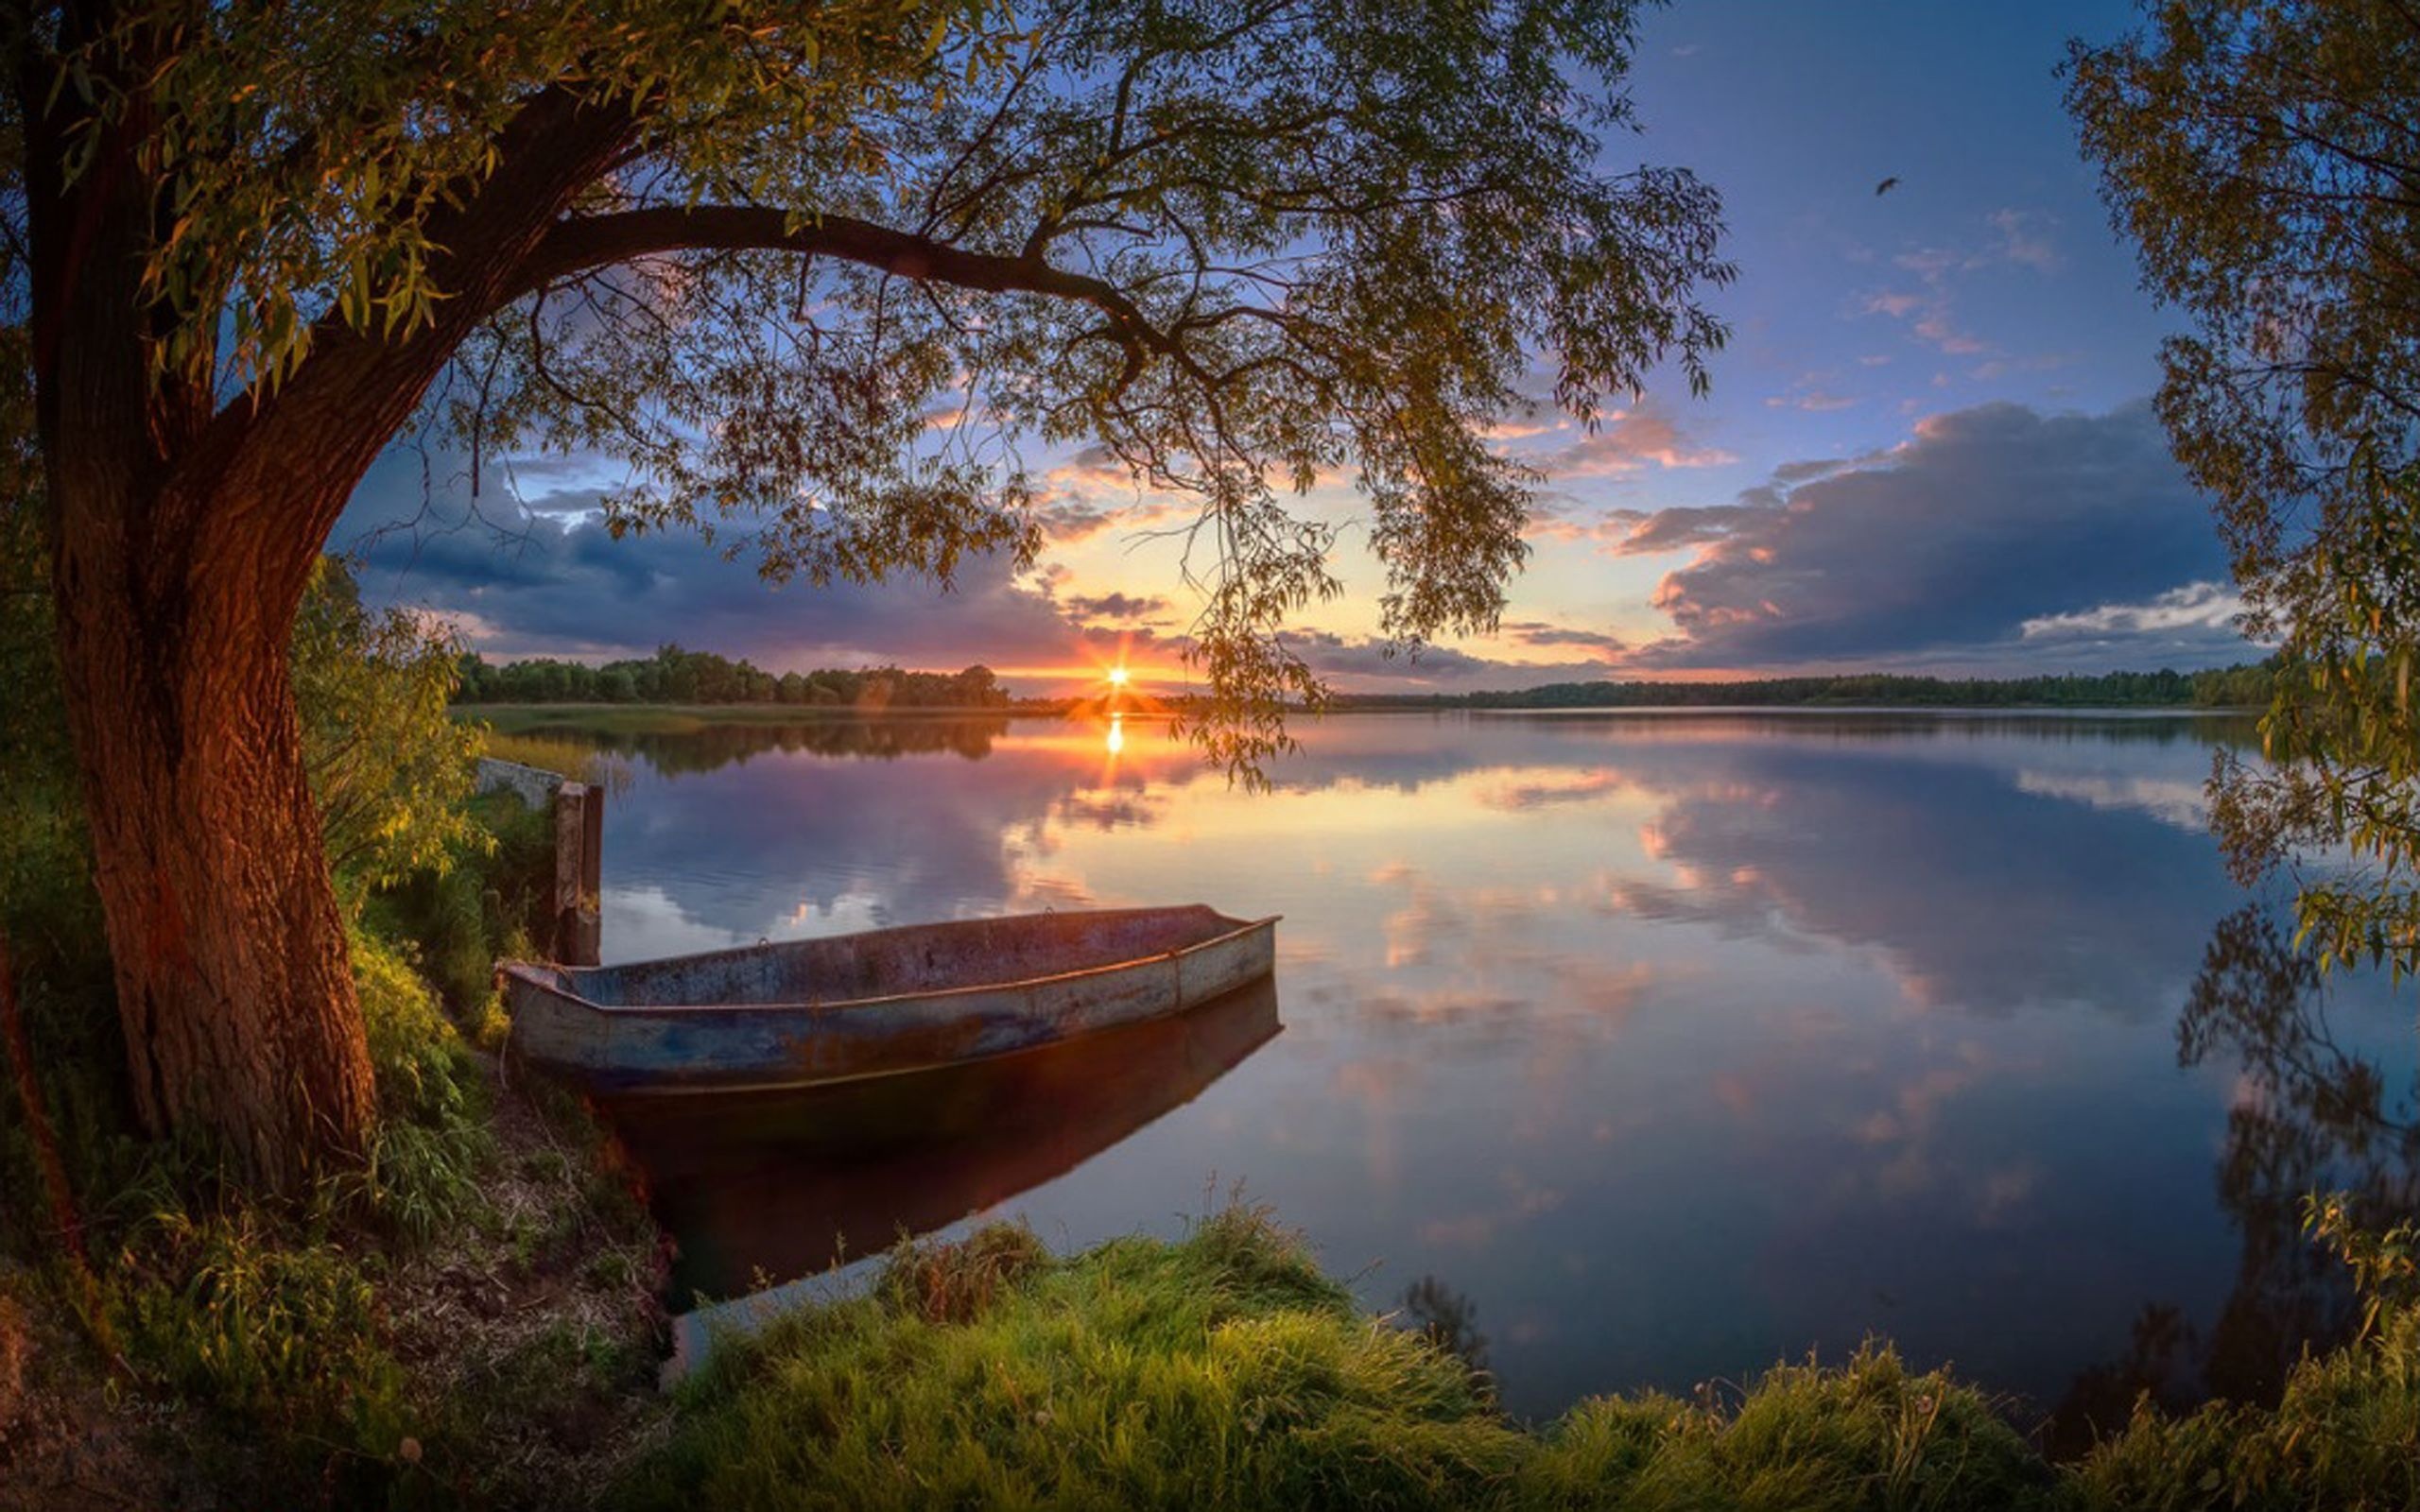 Summer lake desktop wallpapers, Nature's serenity, Tranquil scenery, Beautiful reflections, 2560x1600 HD Desktop